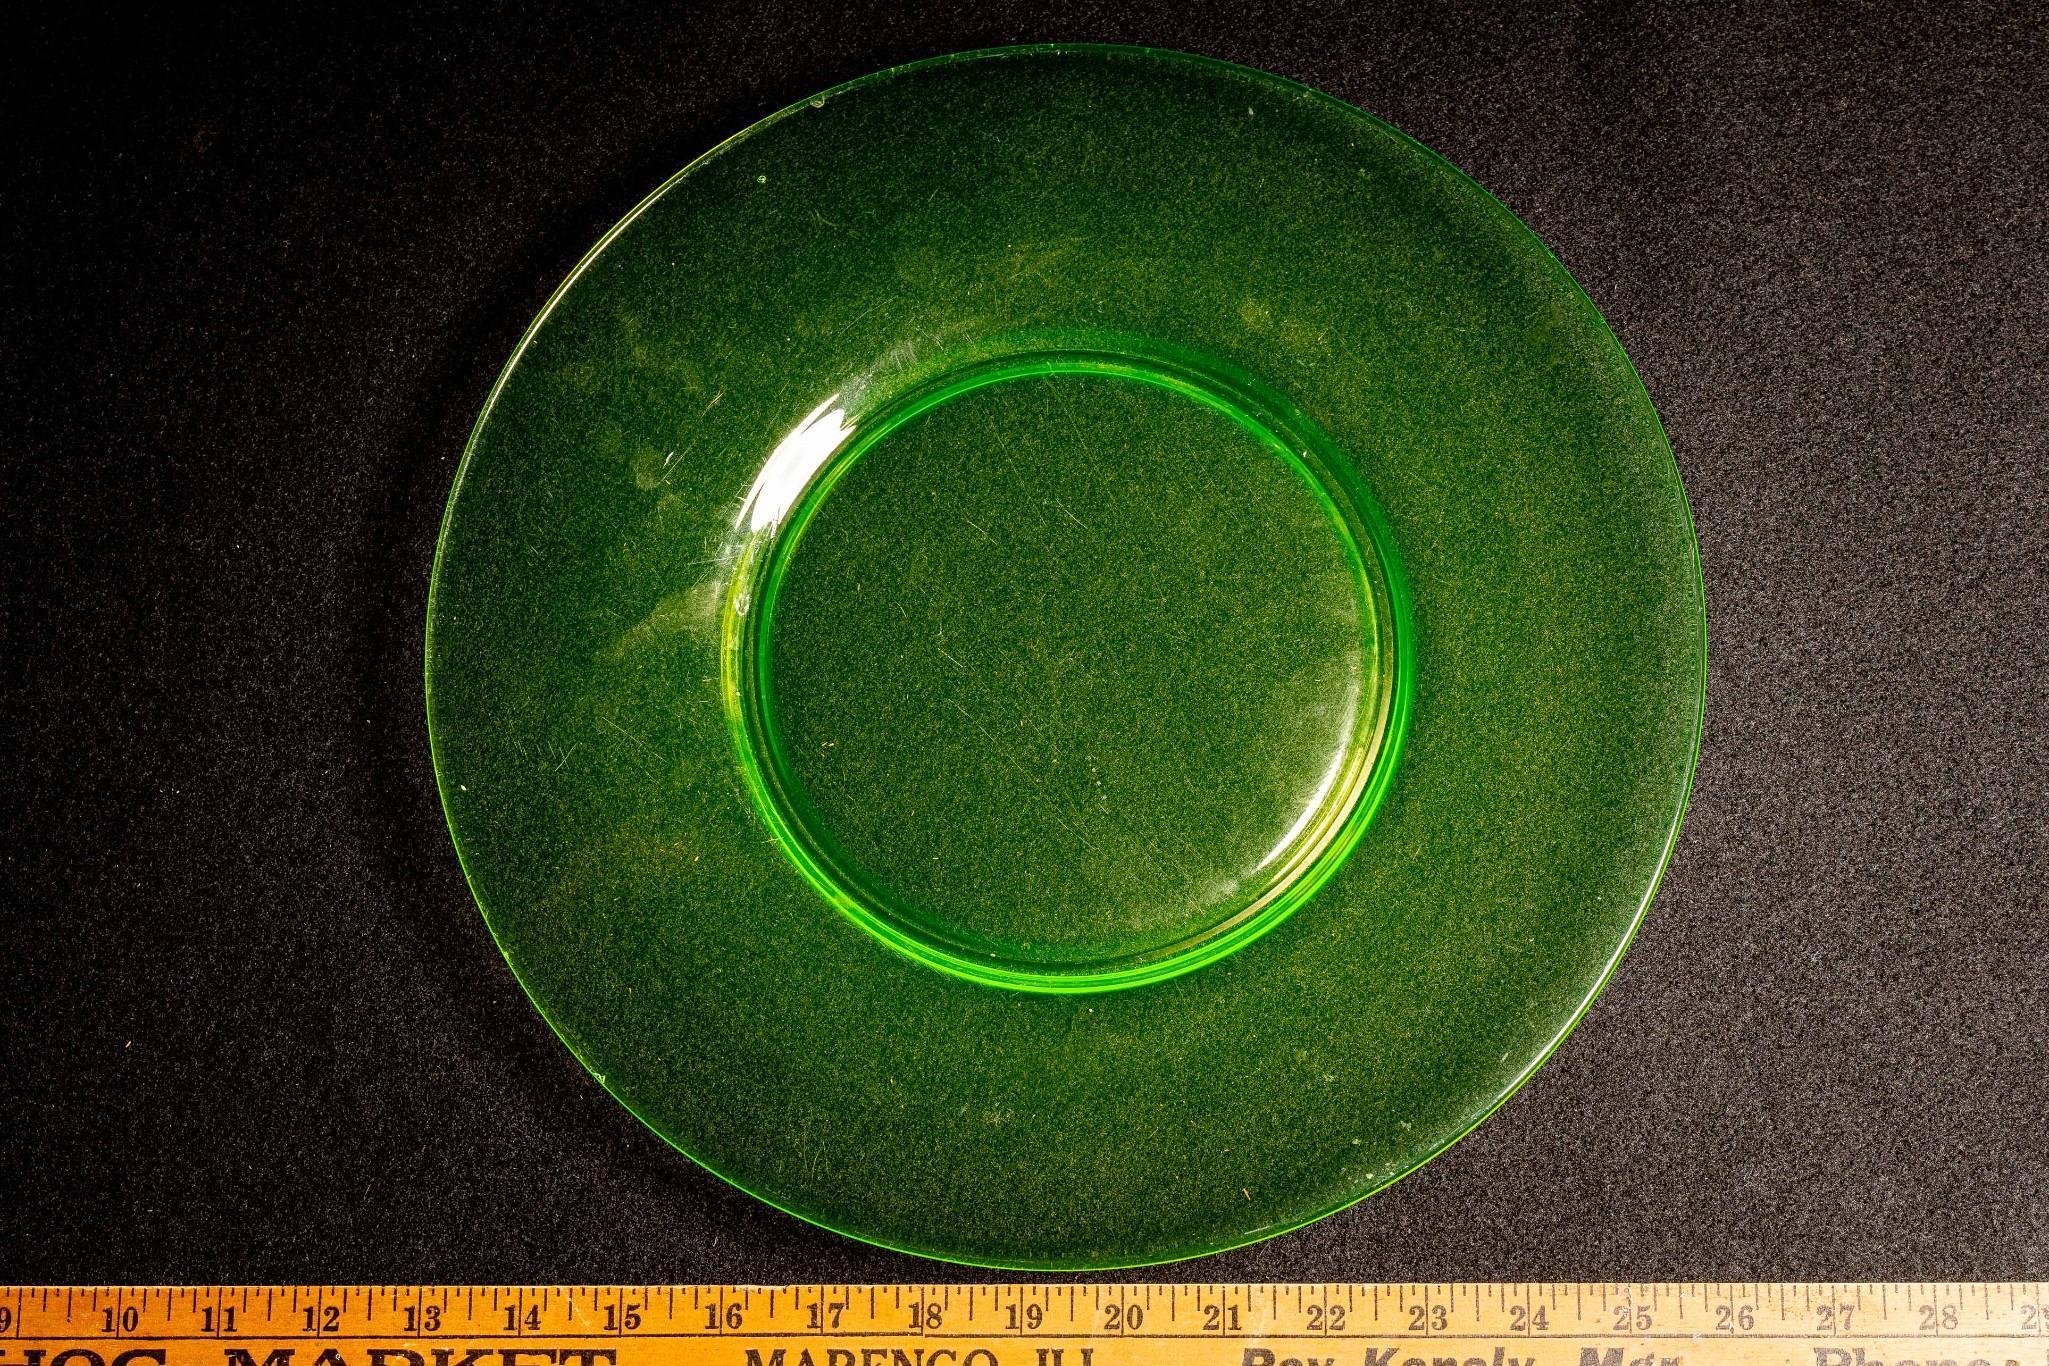 Uranium Glass Serving Plate